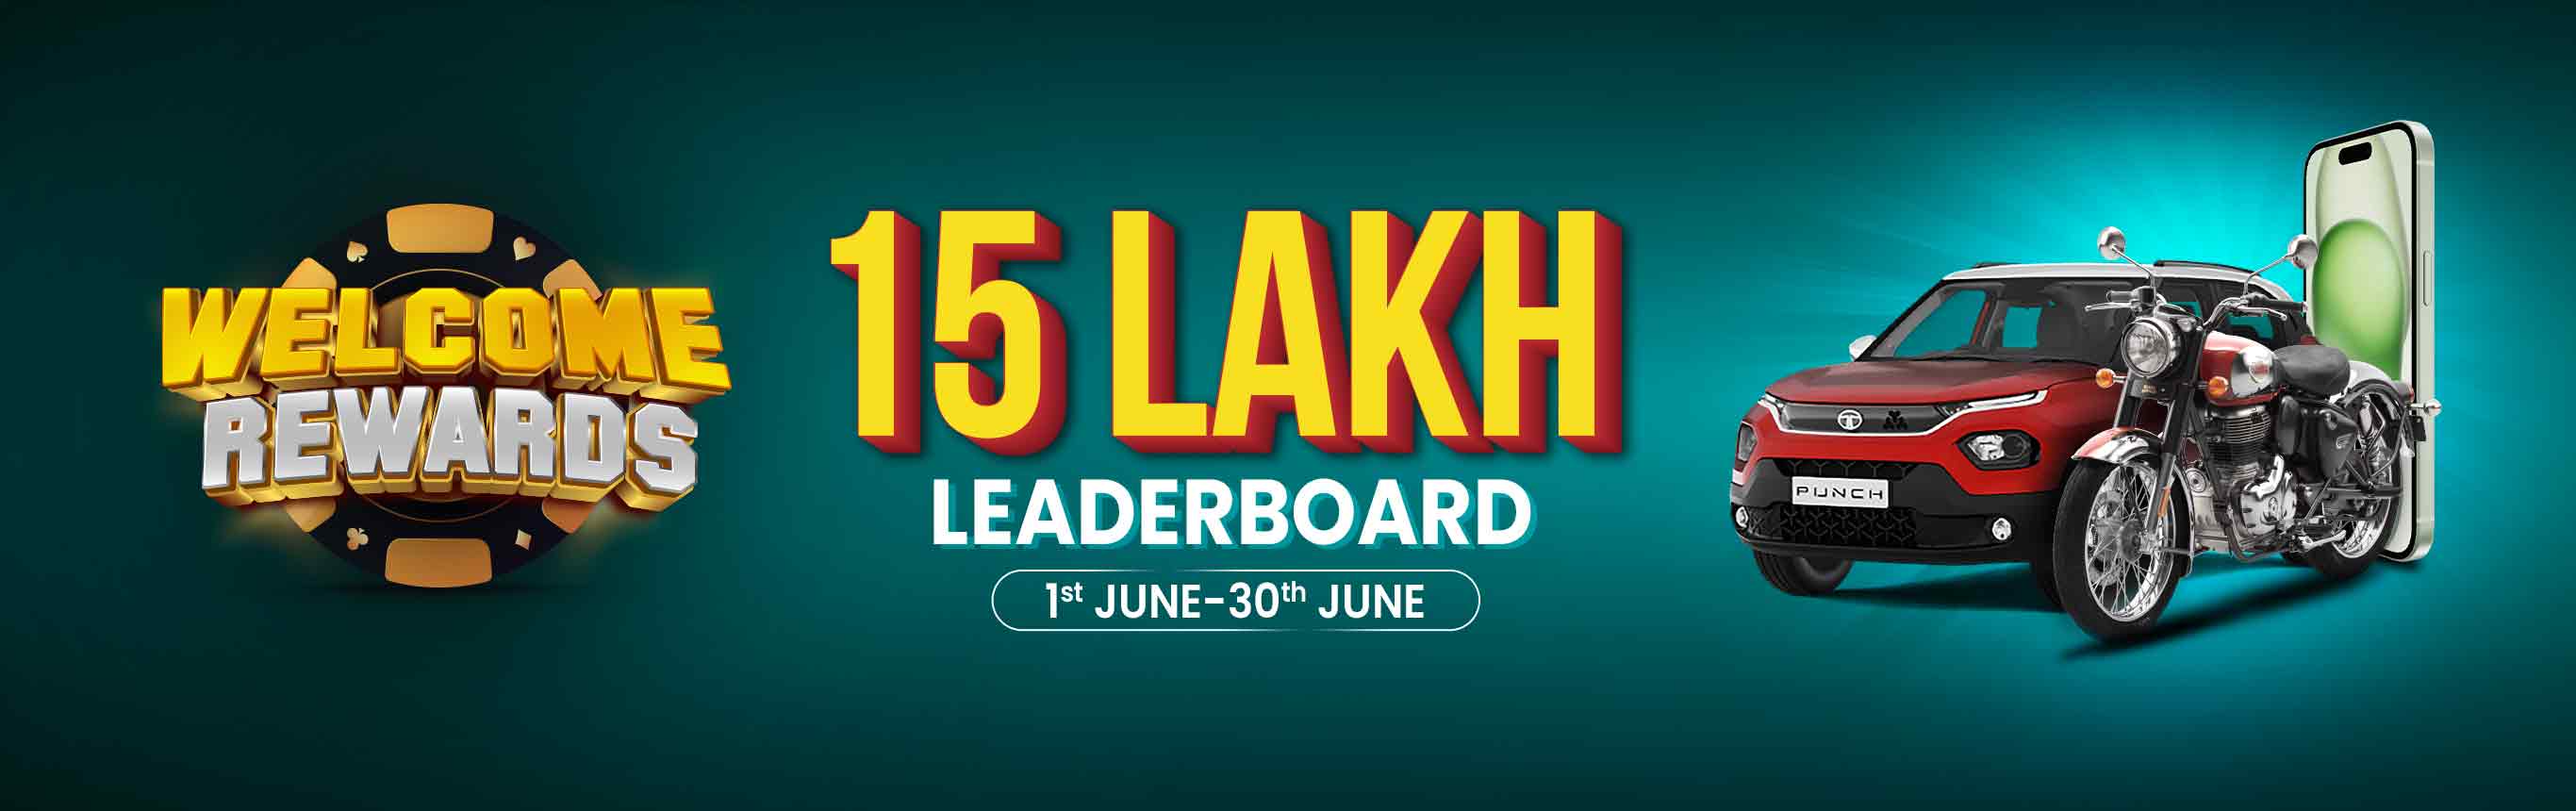 15 Lakh Leaderboard